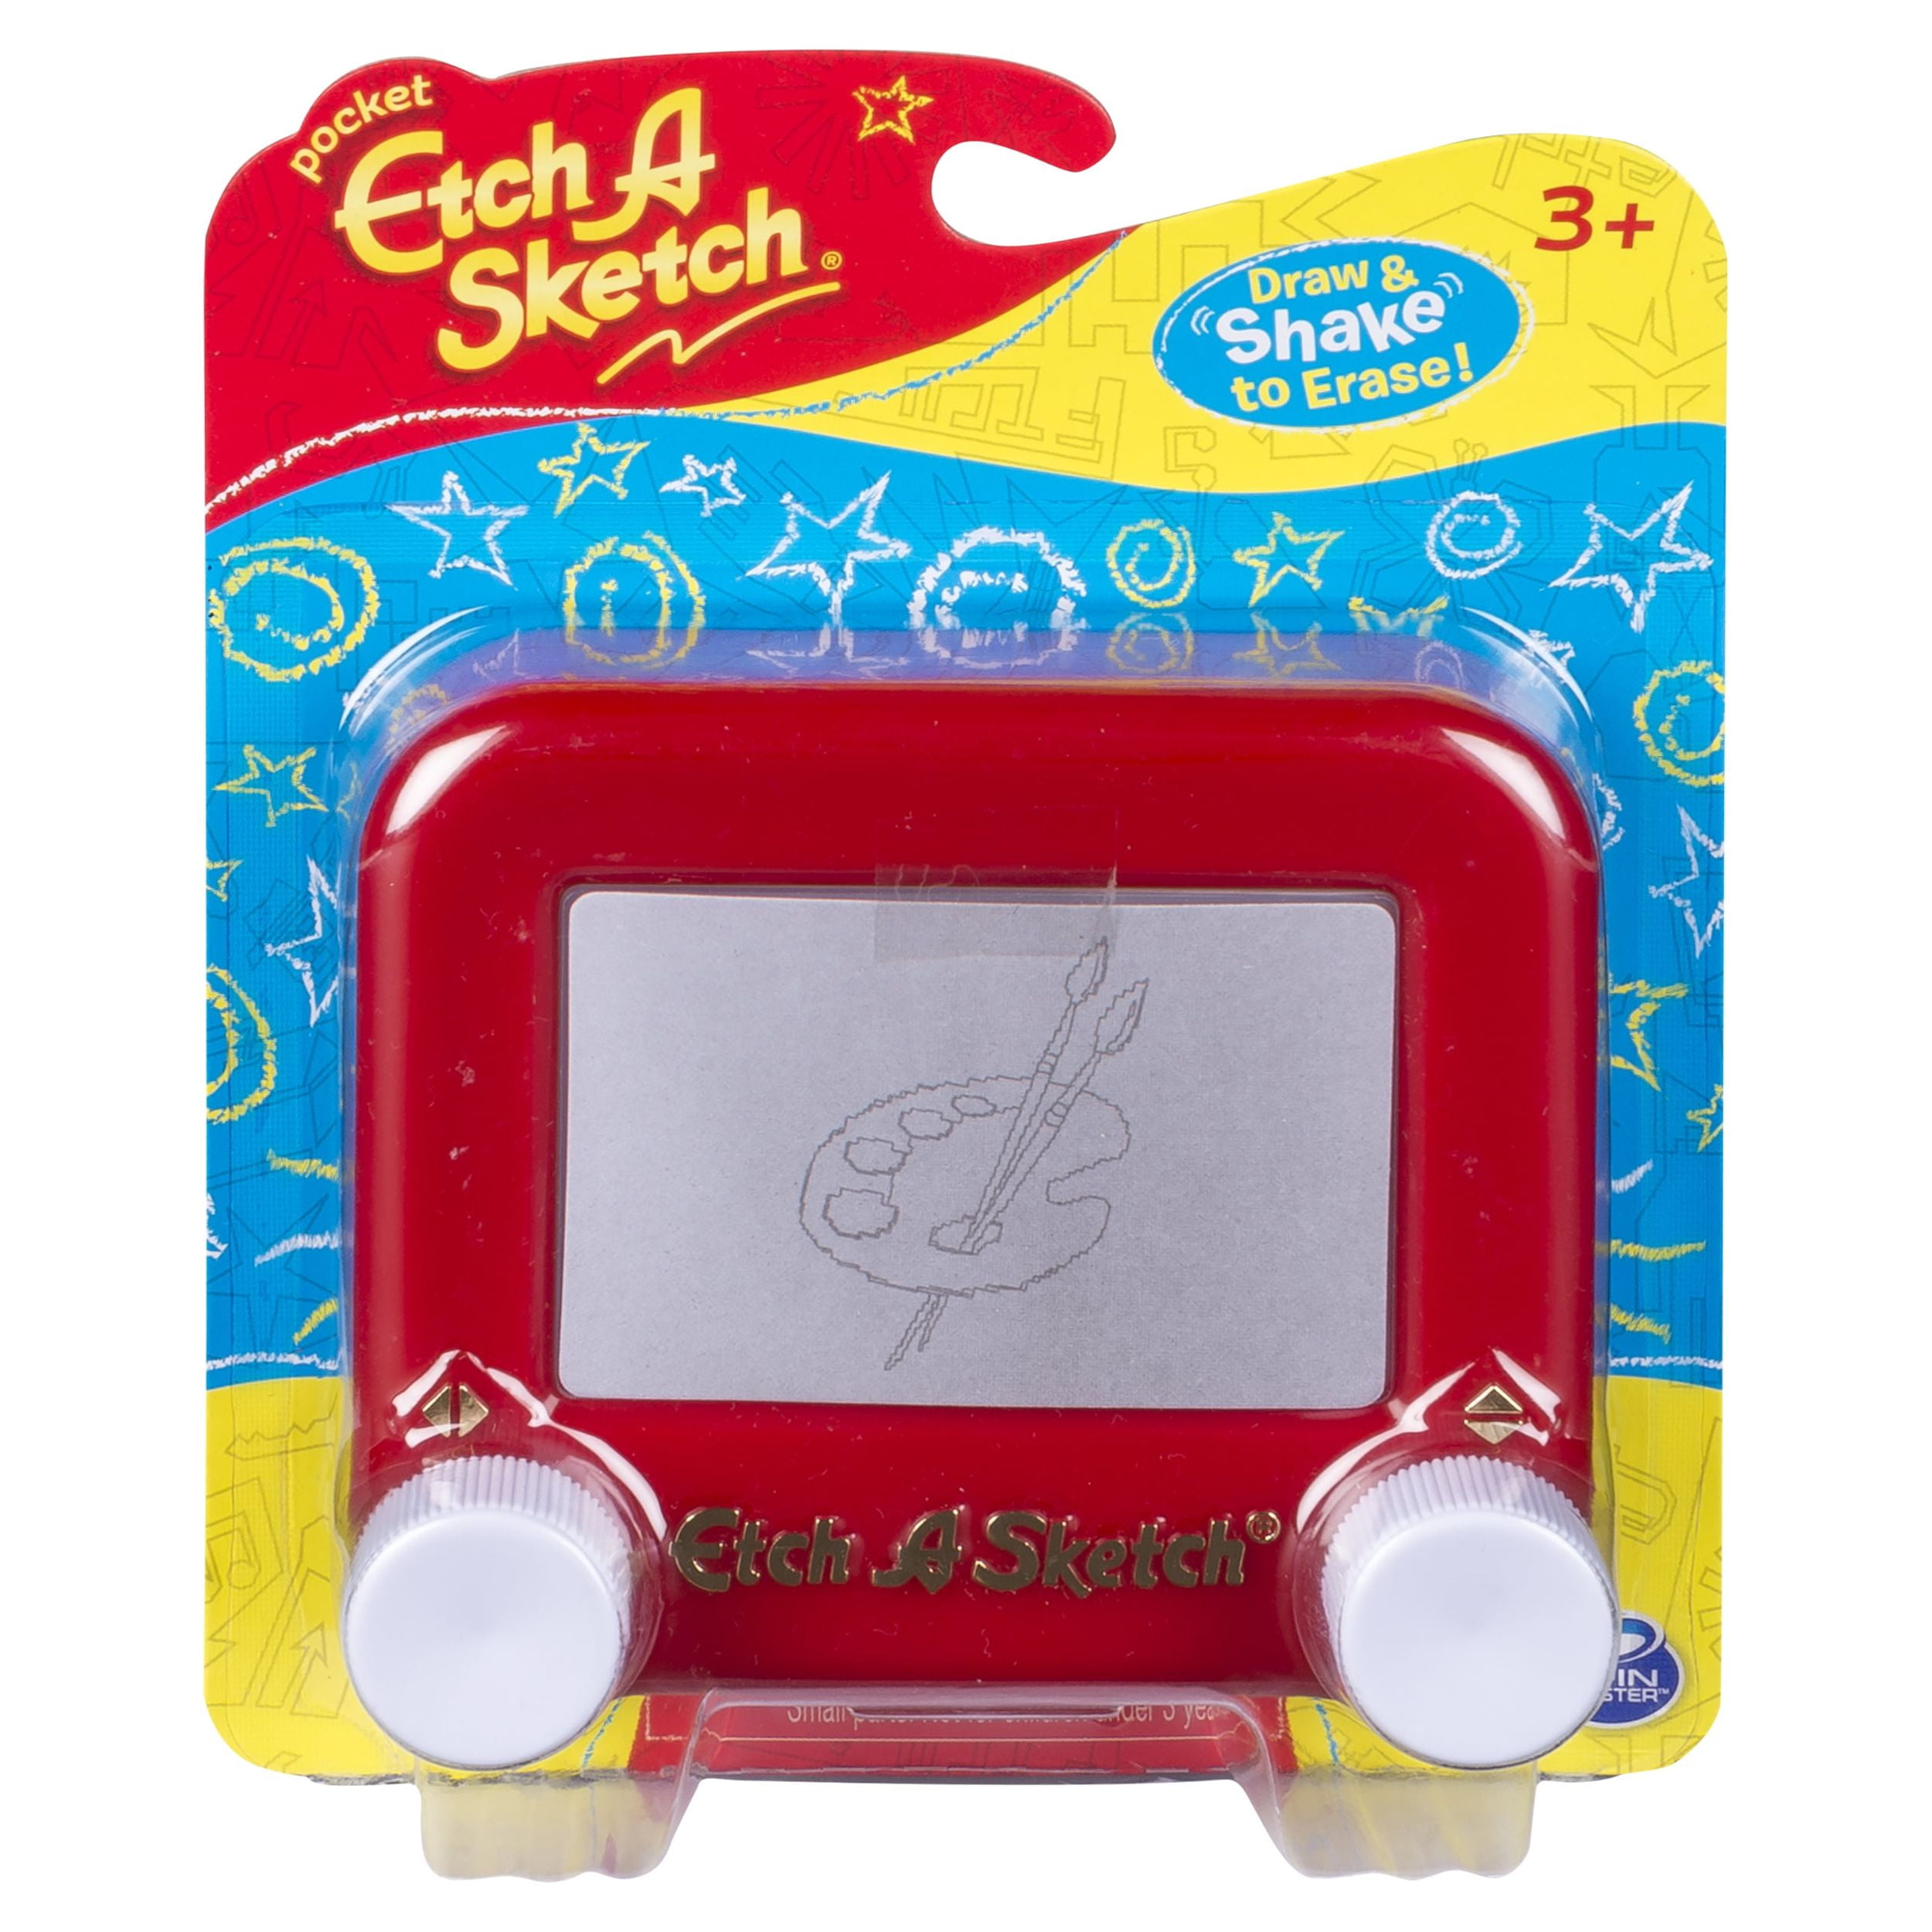 Etch A Sketch Drawing Toy, Pocket